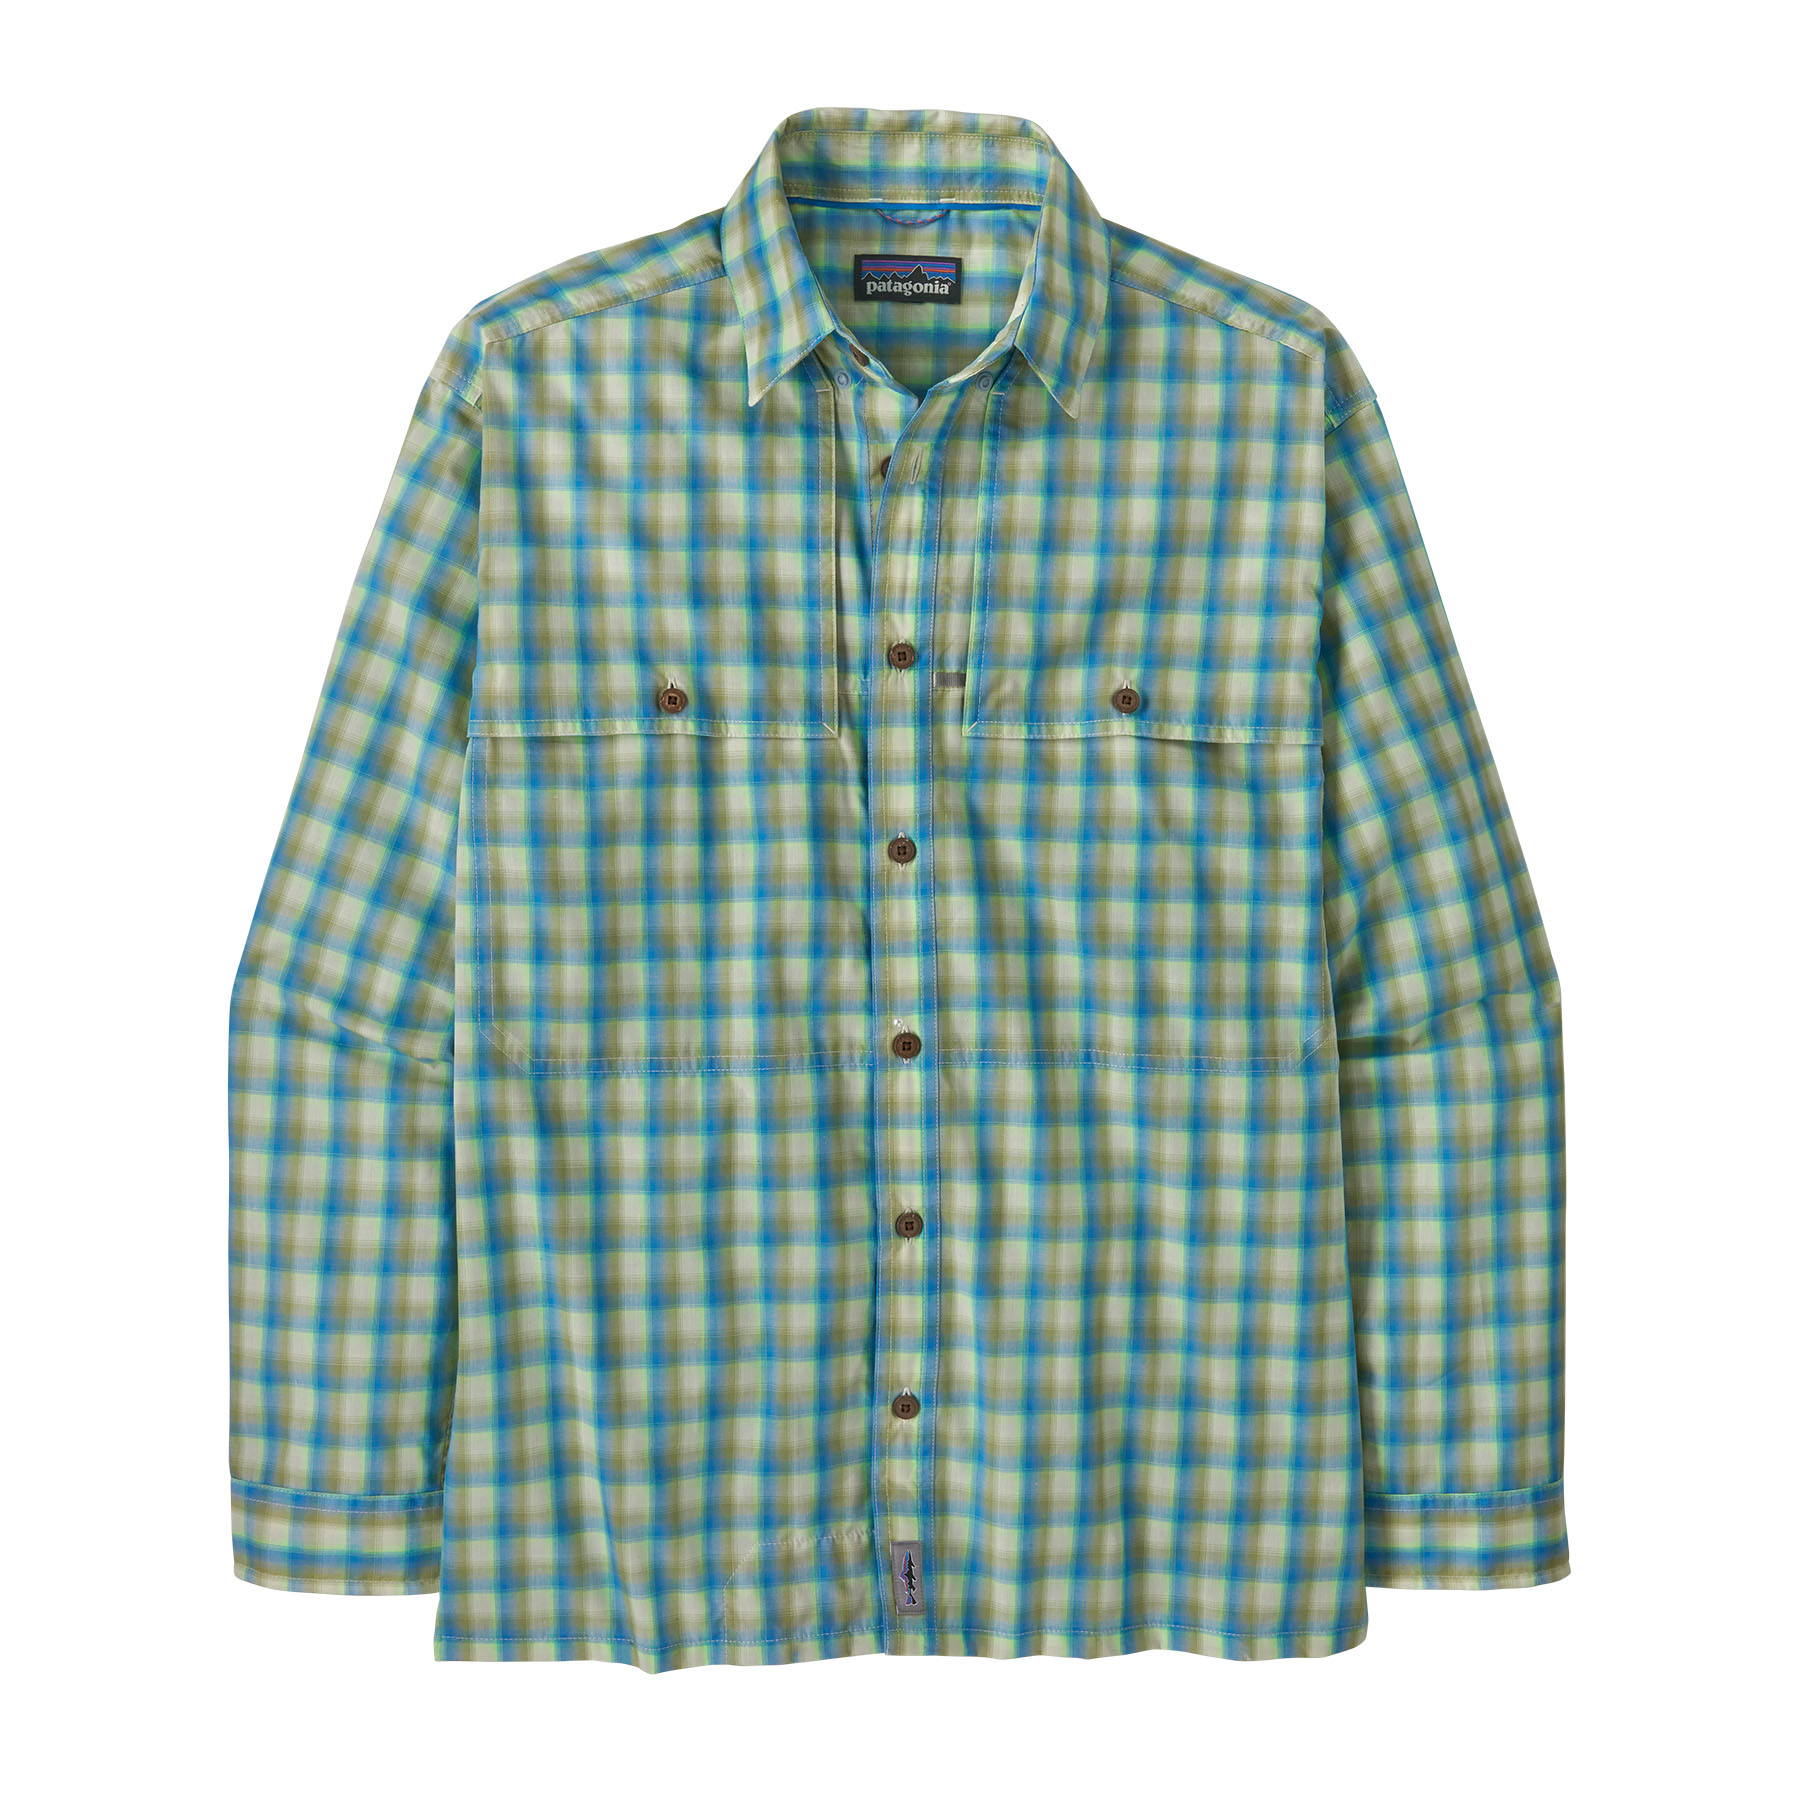 Men's L/S Island Hopper Shirt (Mirrored: Vessel Blue)